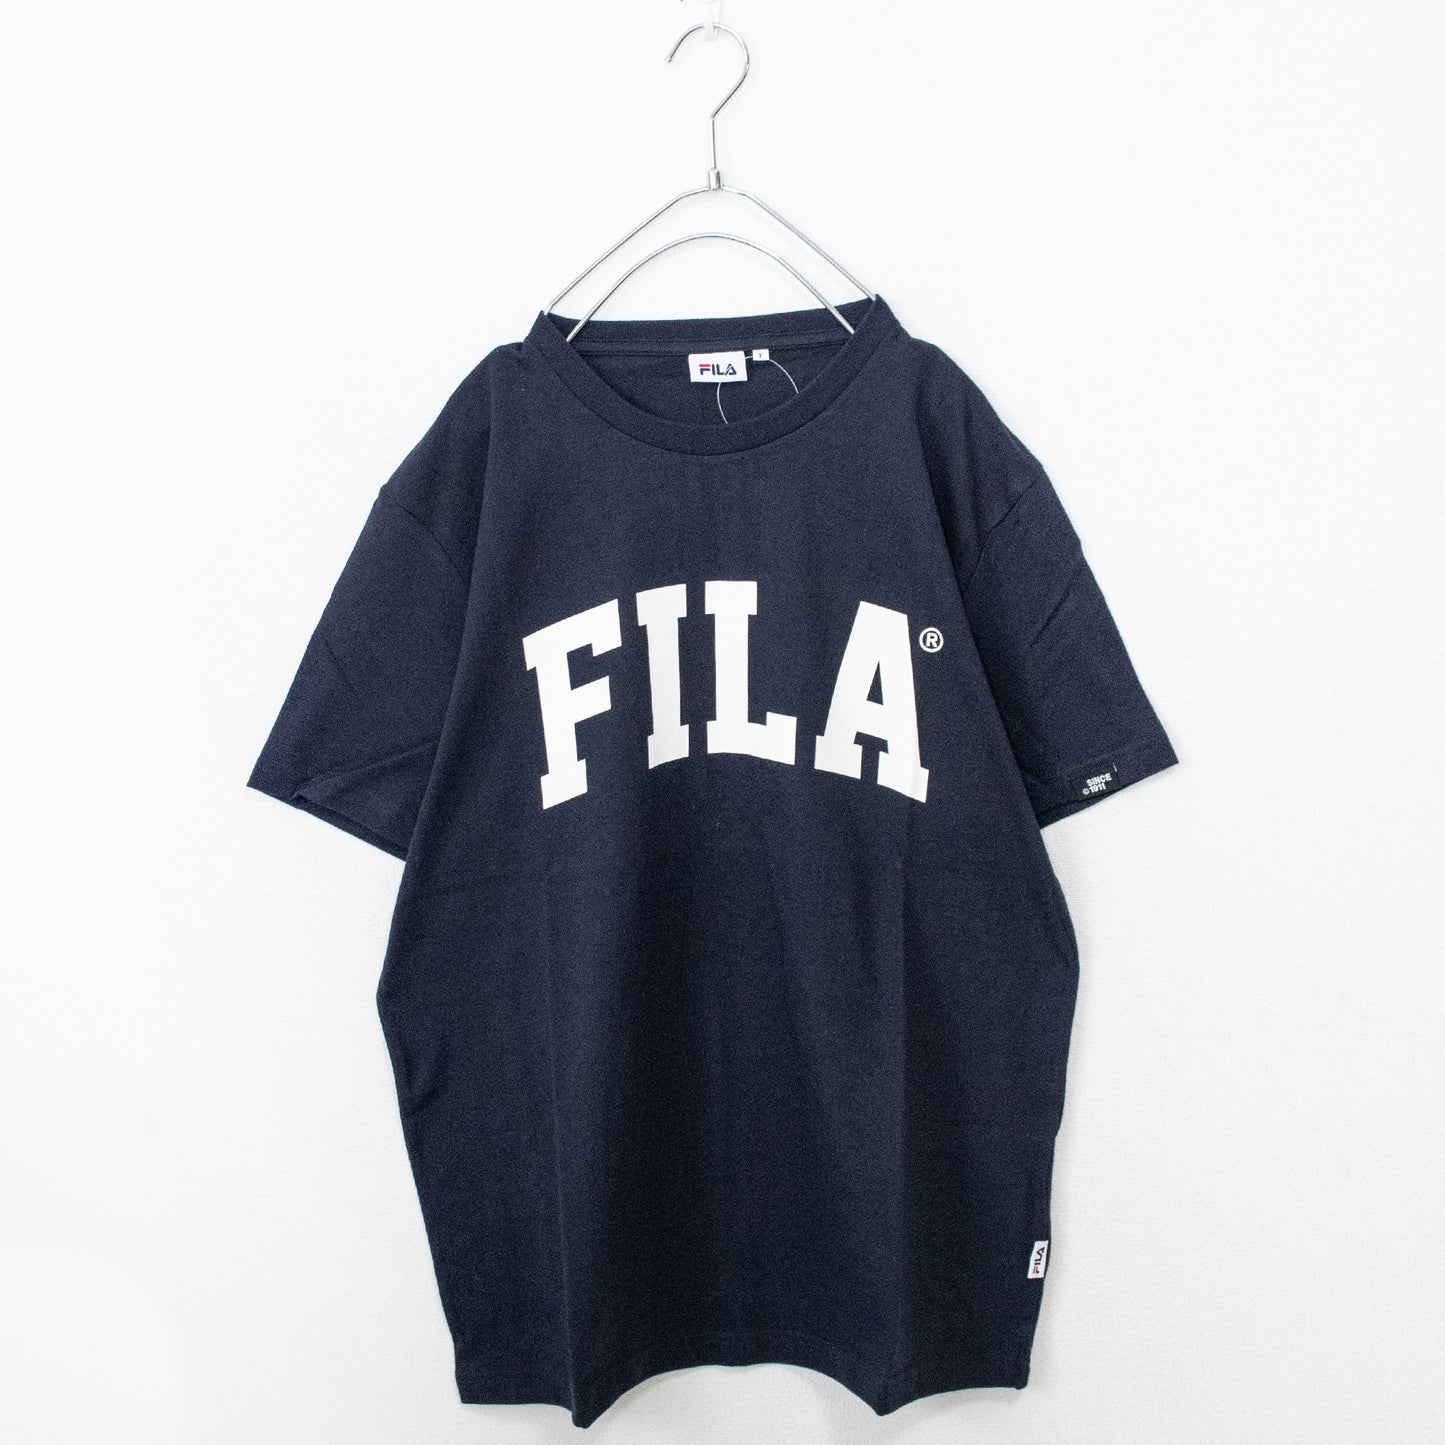 FILA BTS着用モデル Tシャツ BLACK